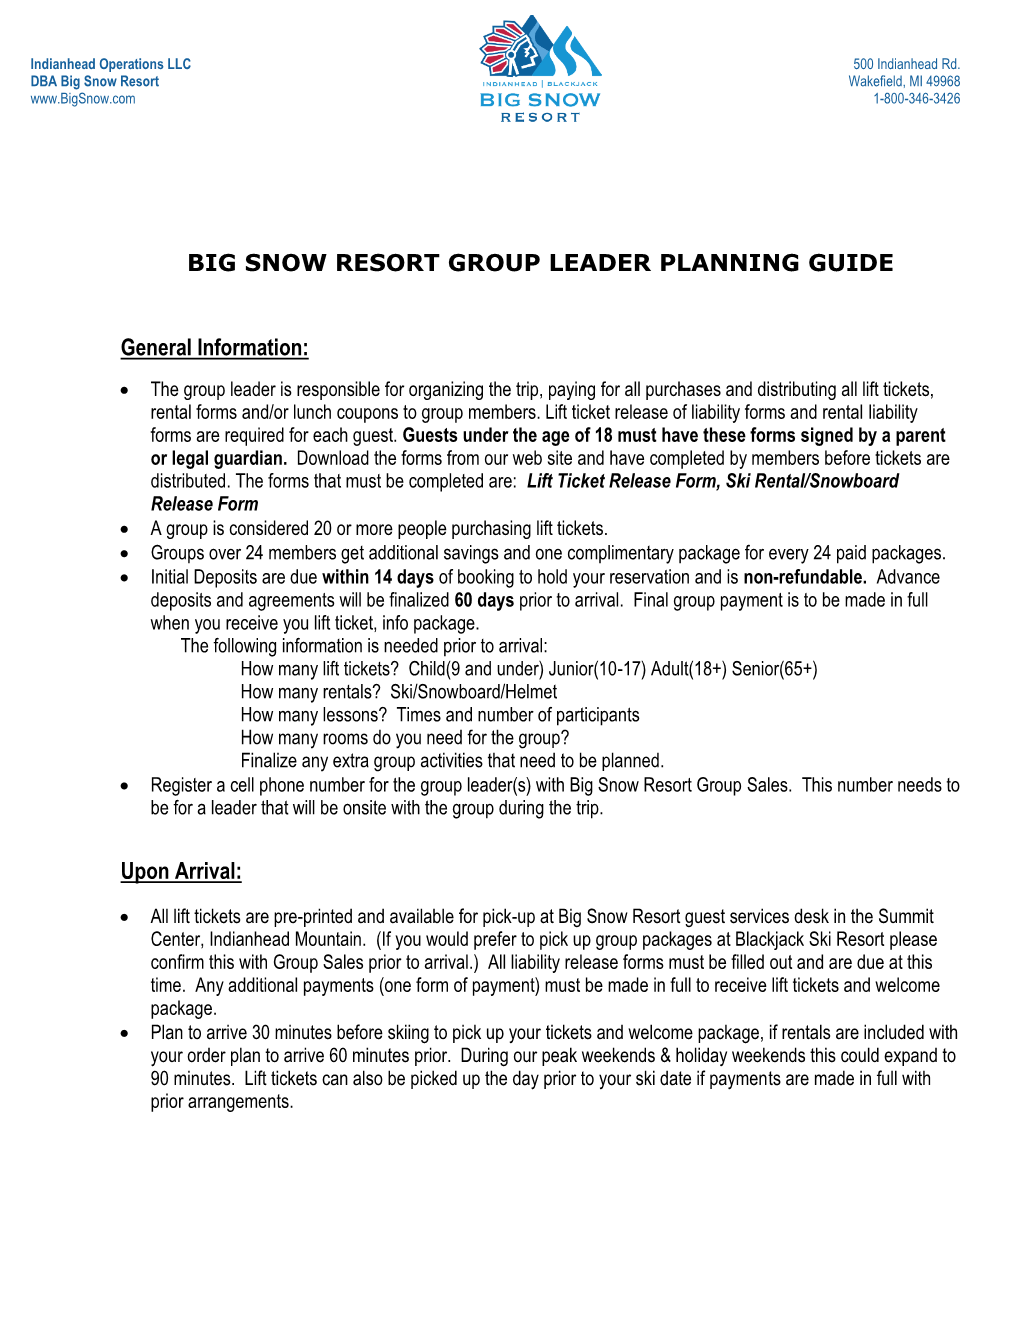 Big Snow Resort Group Leader Planning Guide